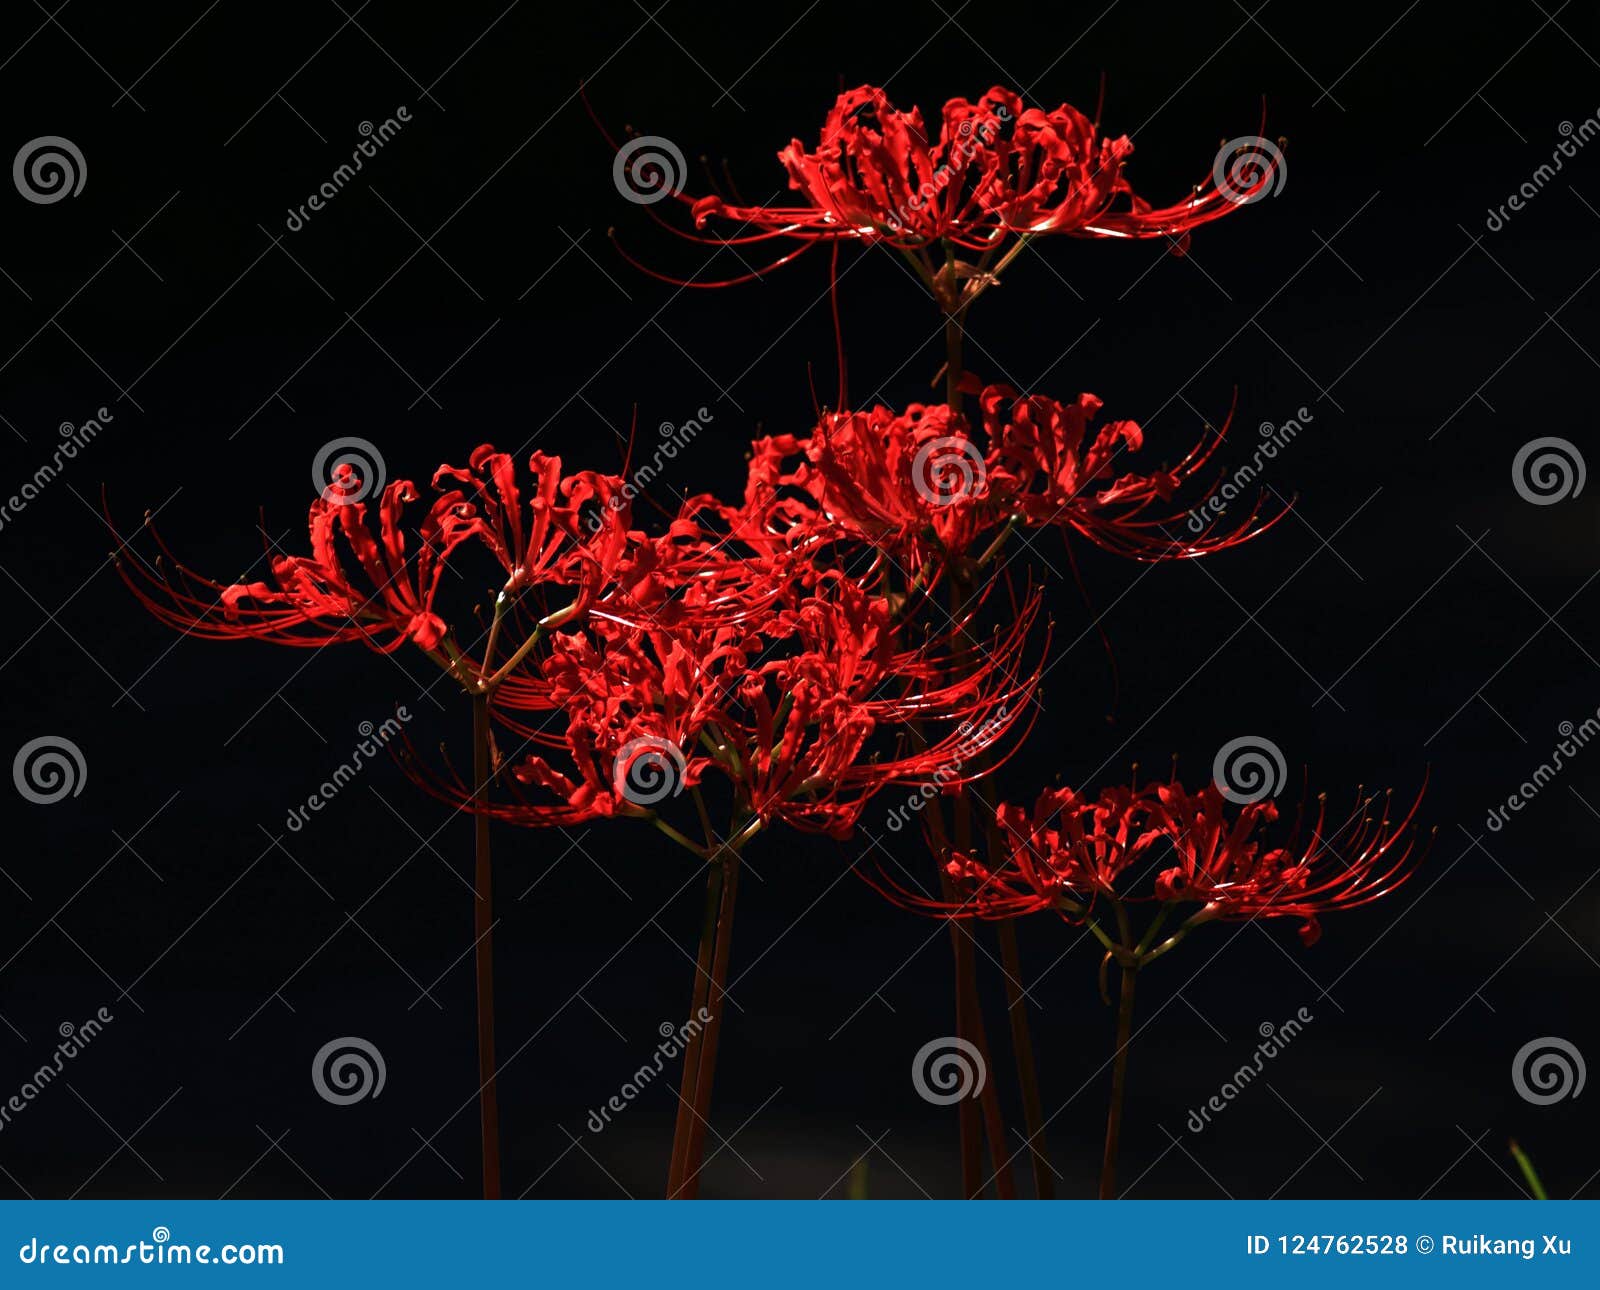 lycoris radiata flowers in full bloom